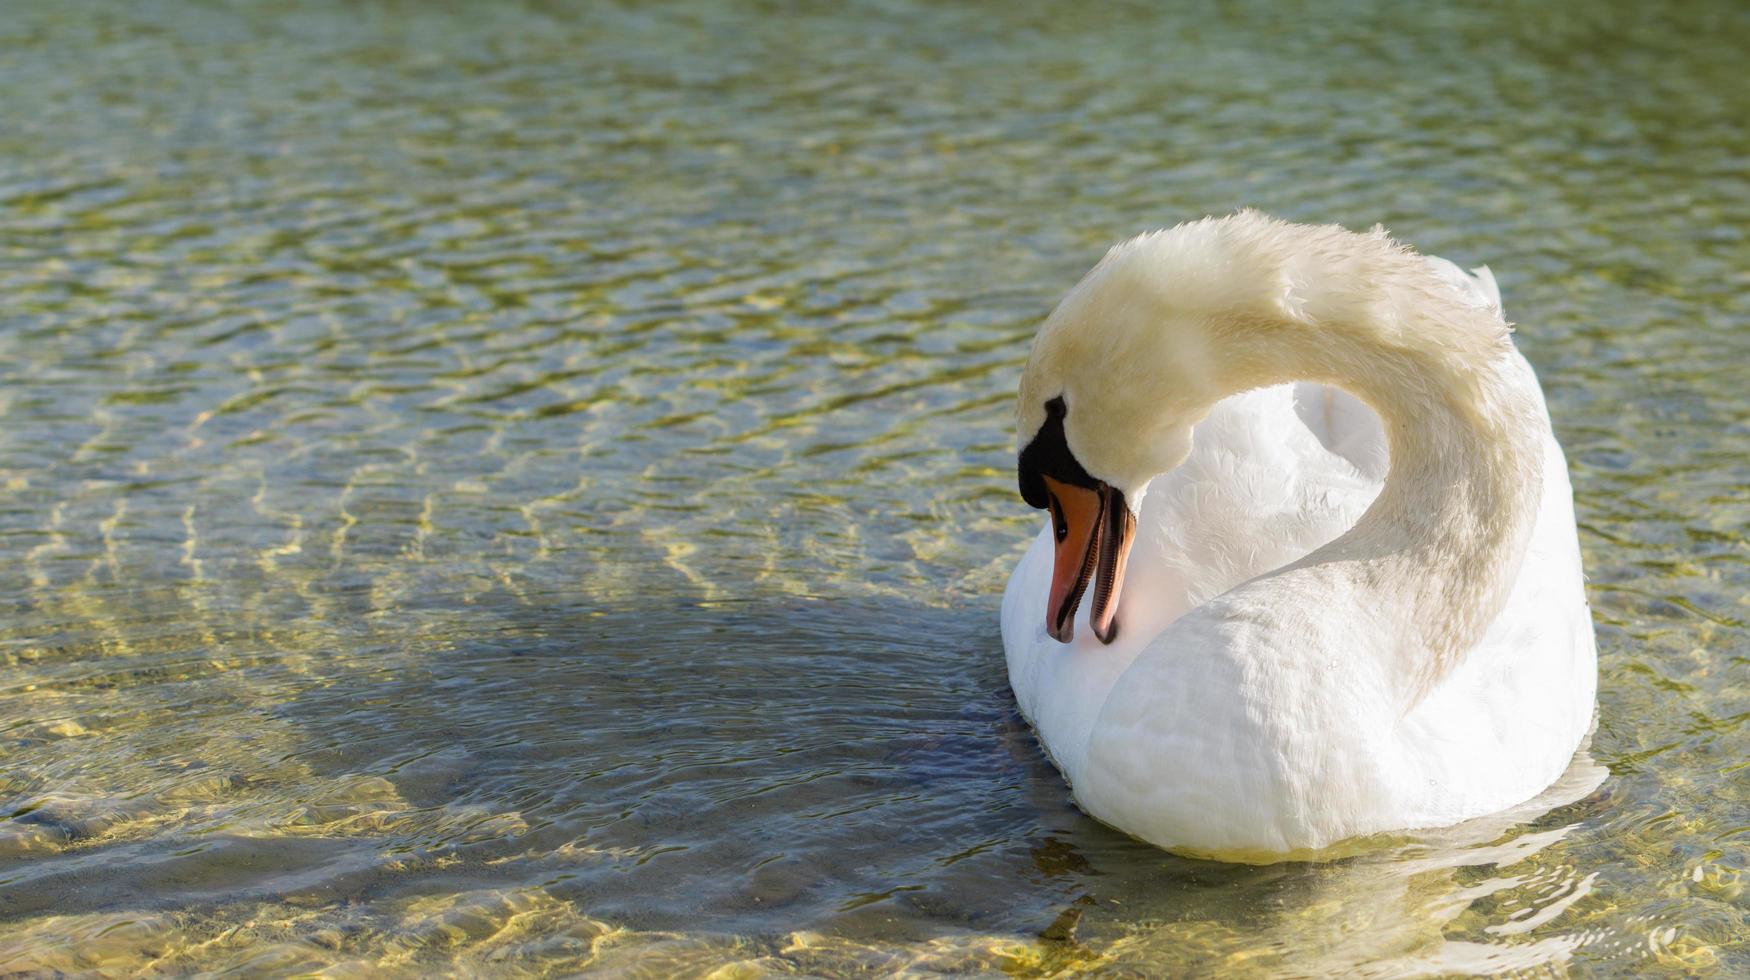 cisne branco no lago foto